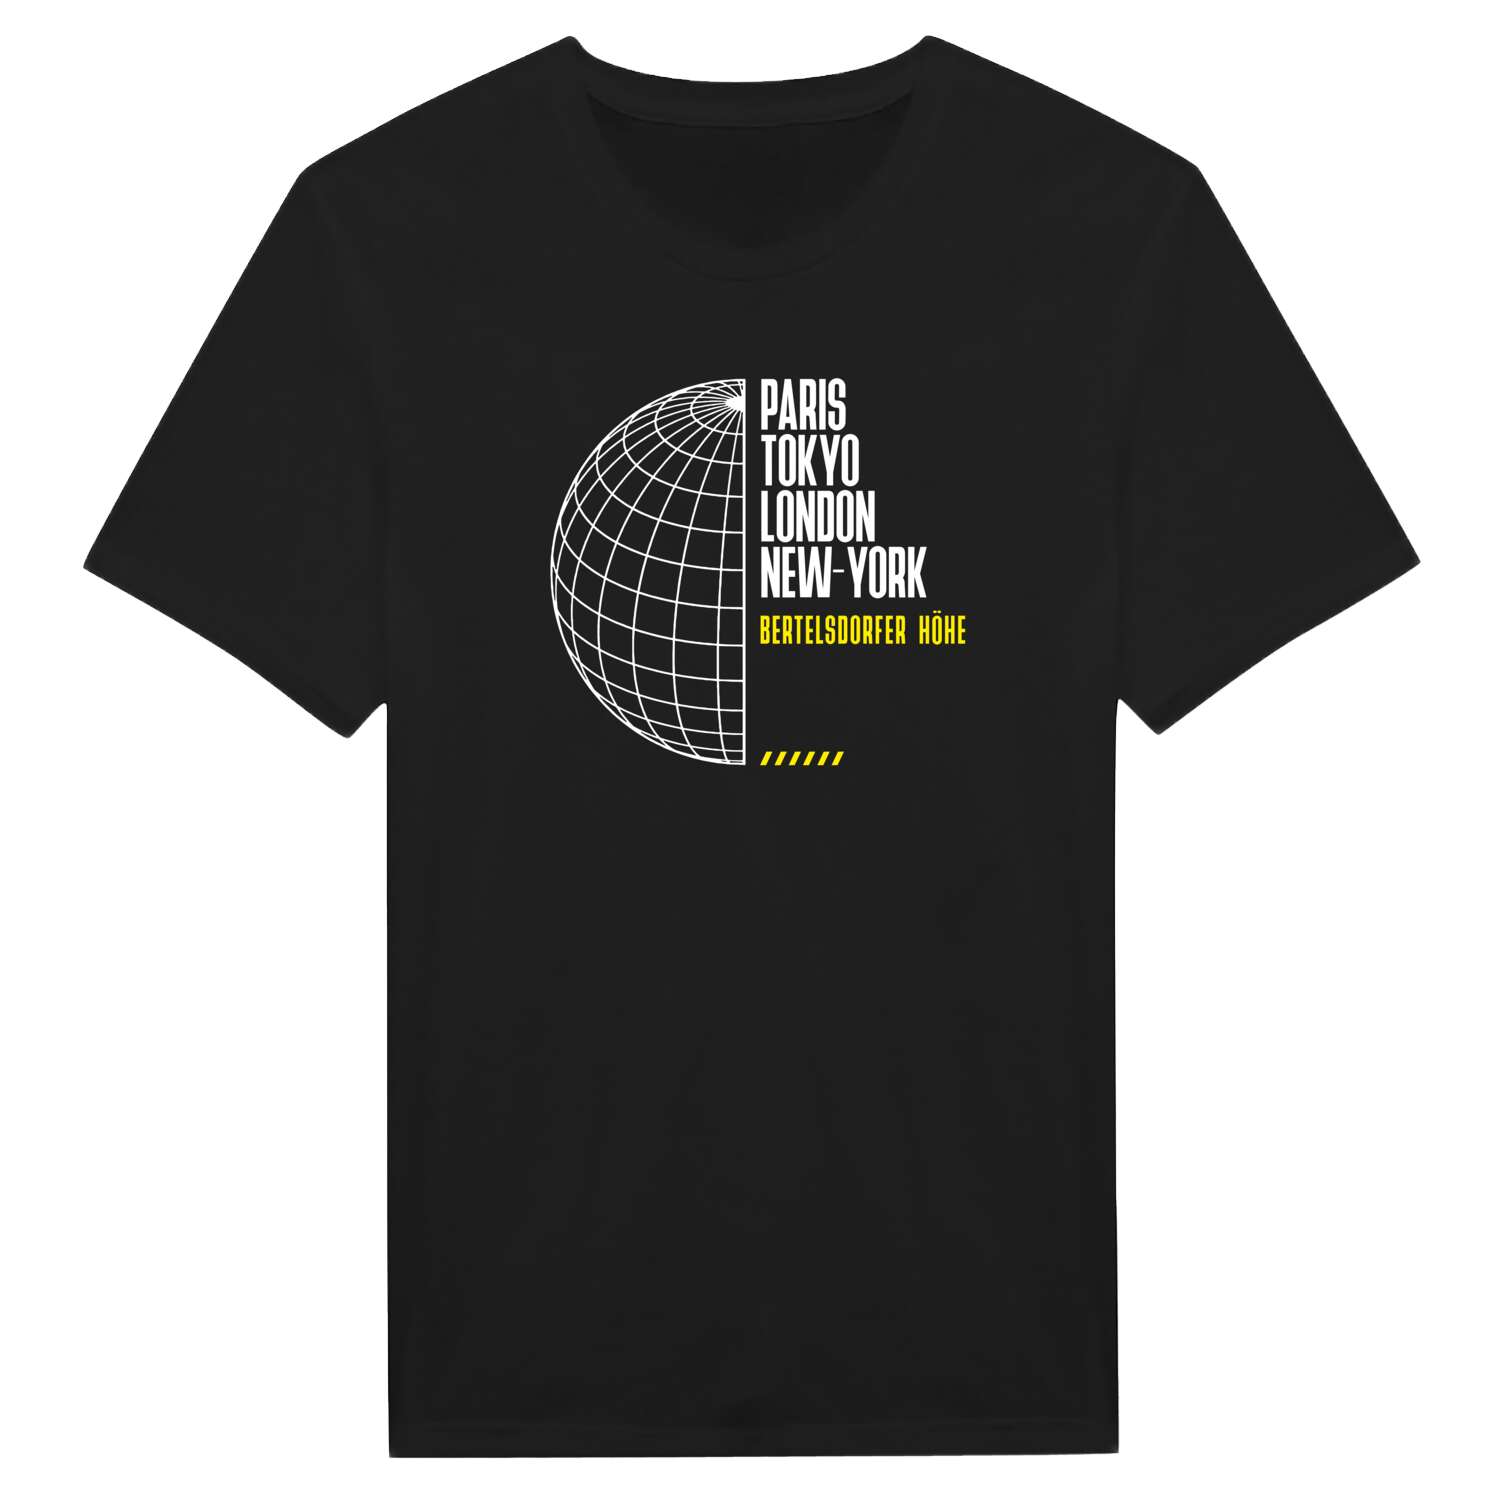 Bertelsdorfer Höhe T-Shirt »Paris Tokyo London«